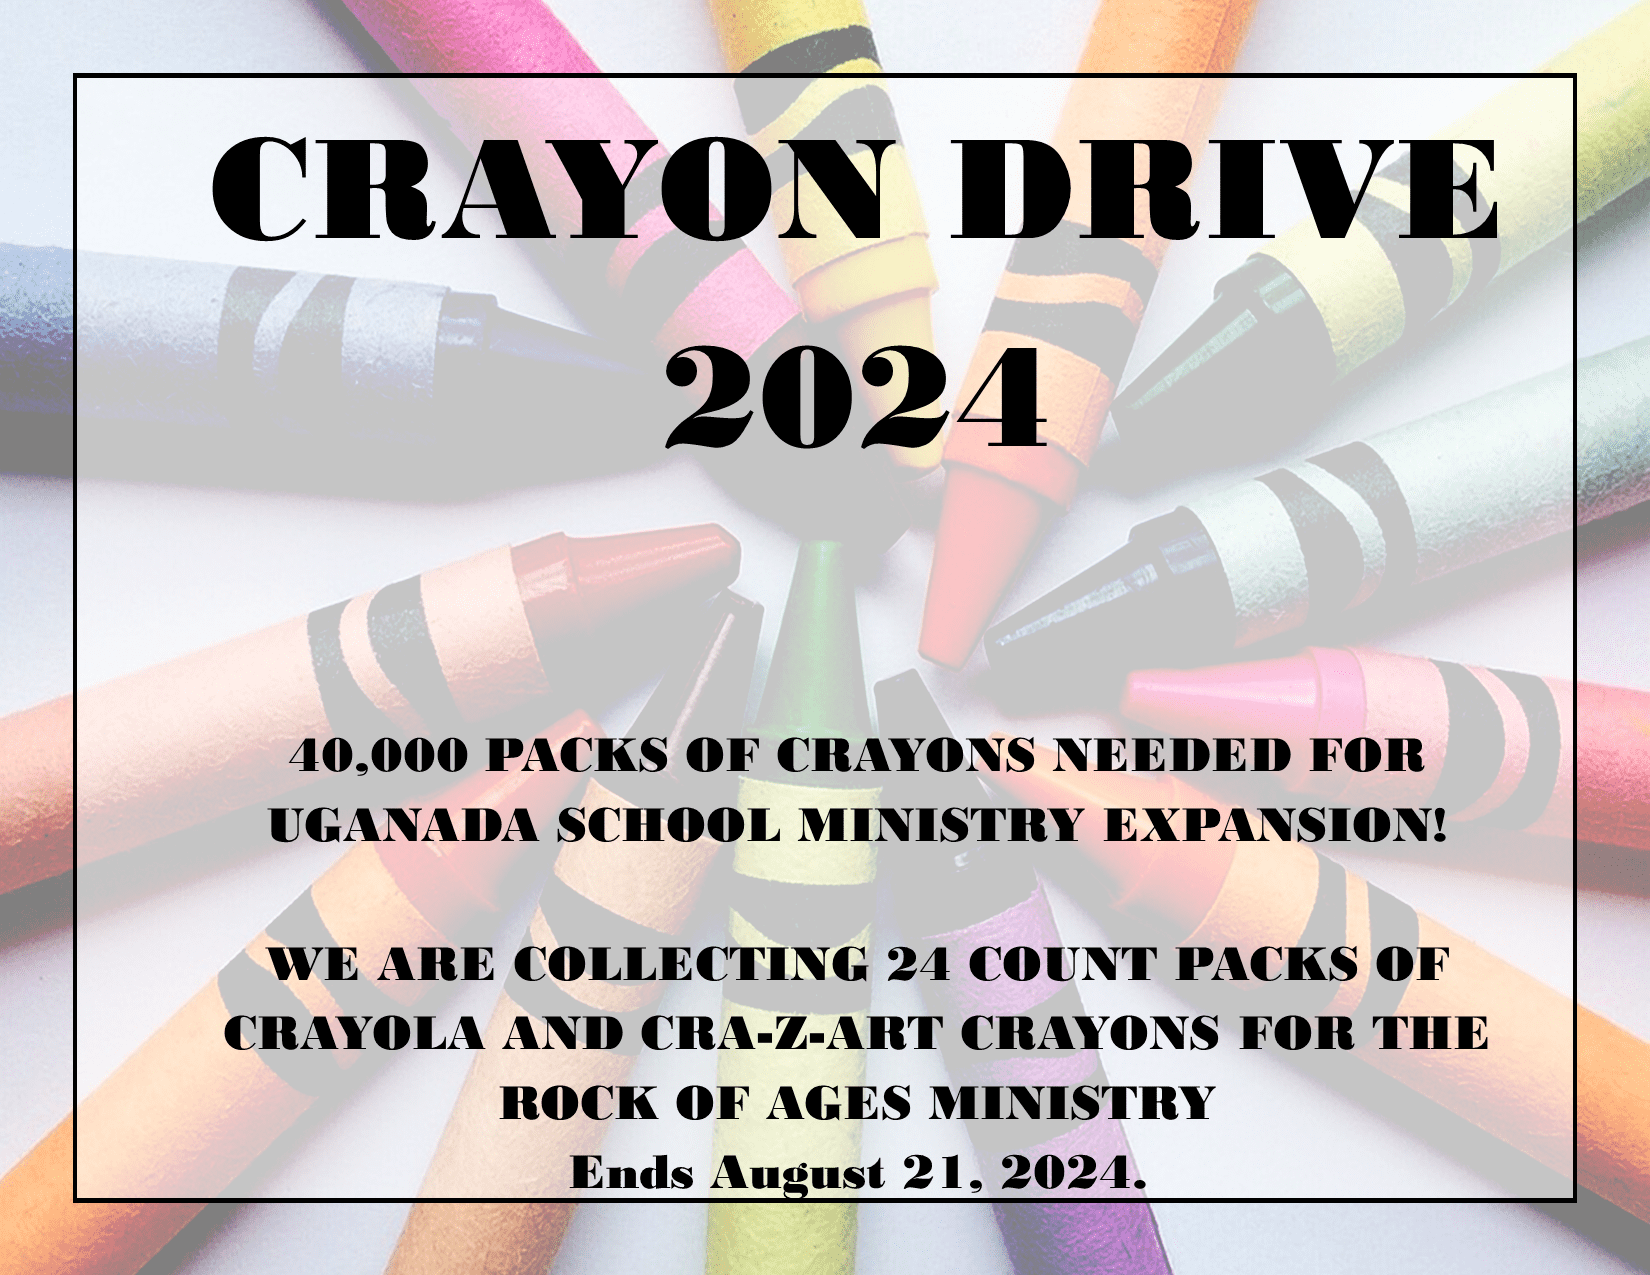 CrayonDrive2024